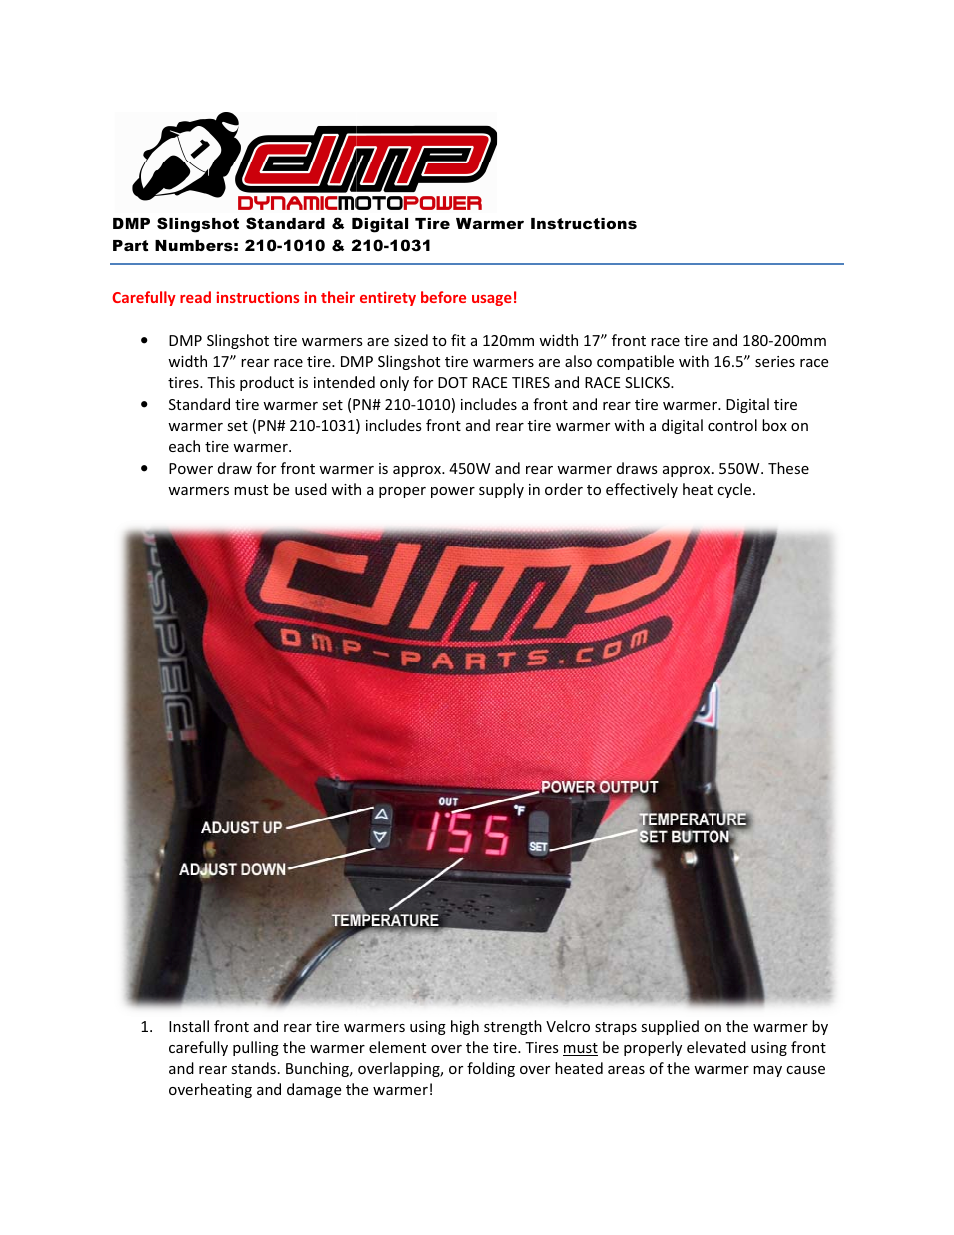 Shogun Motorsports DMP Slingshot Tire Warmers Digital User Manual | 2 pages